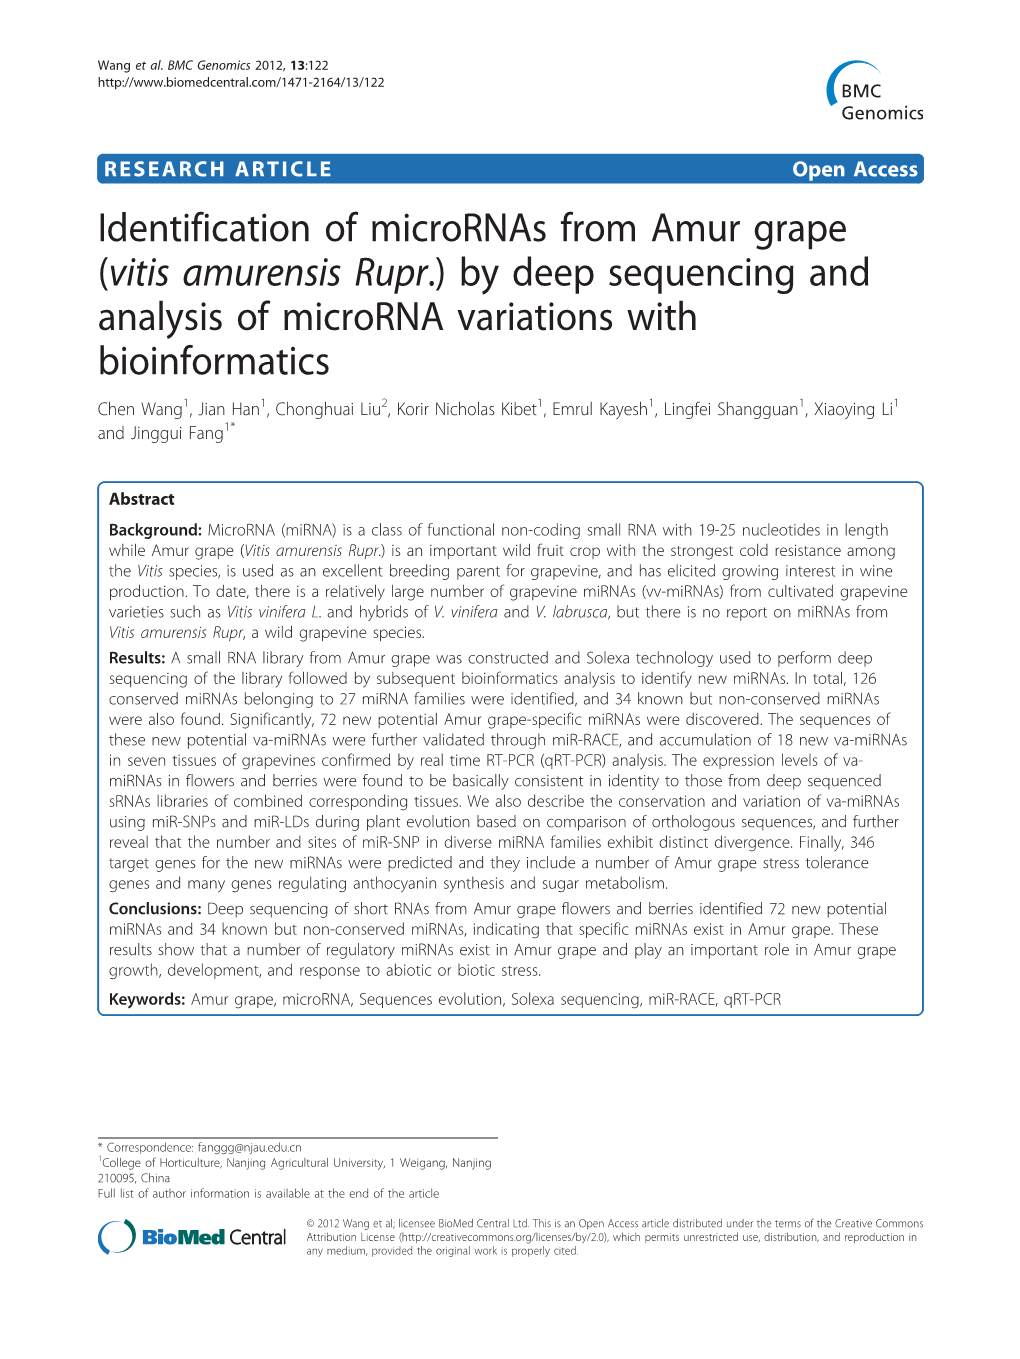 Identification of Micrornas from Amur Grape (Vitis Amurensis Rupr.) By